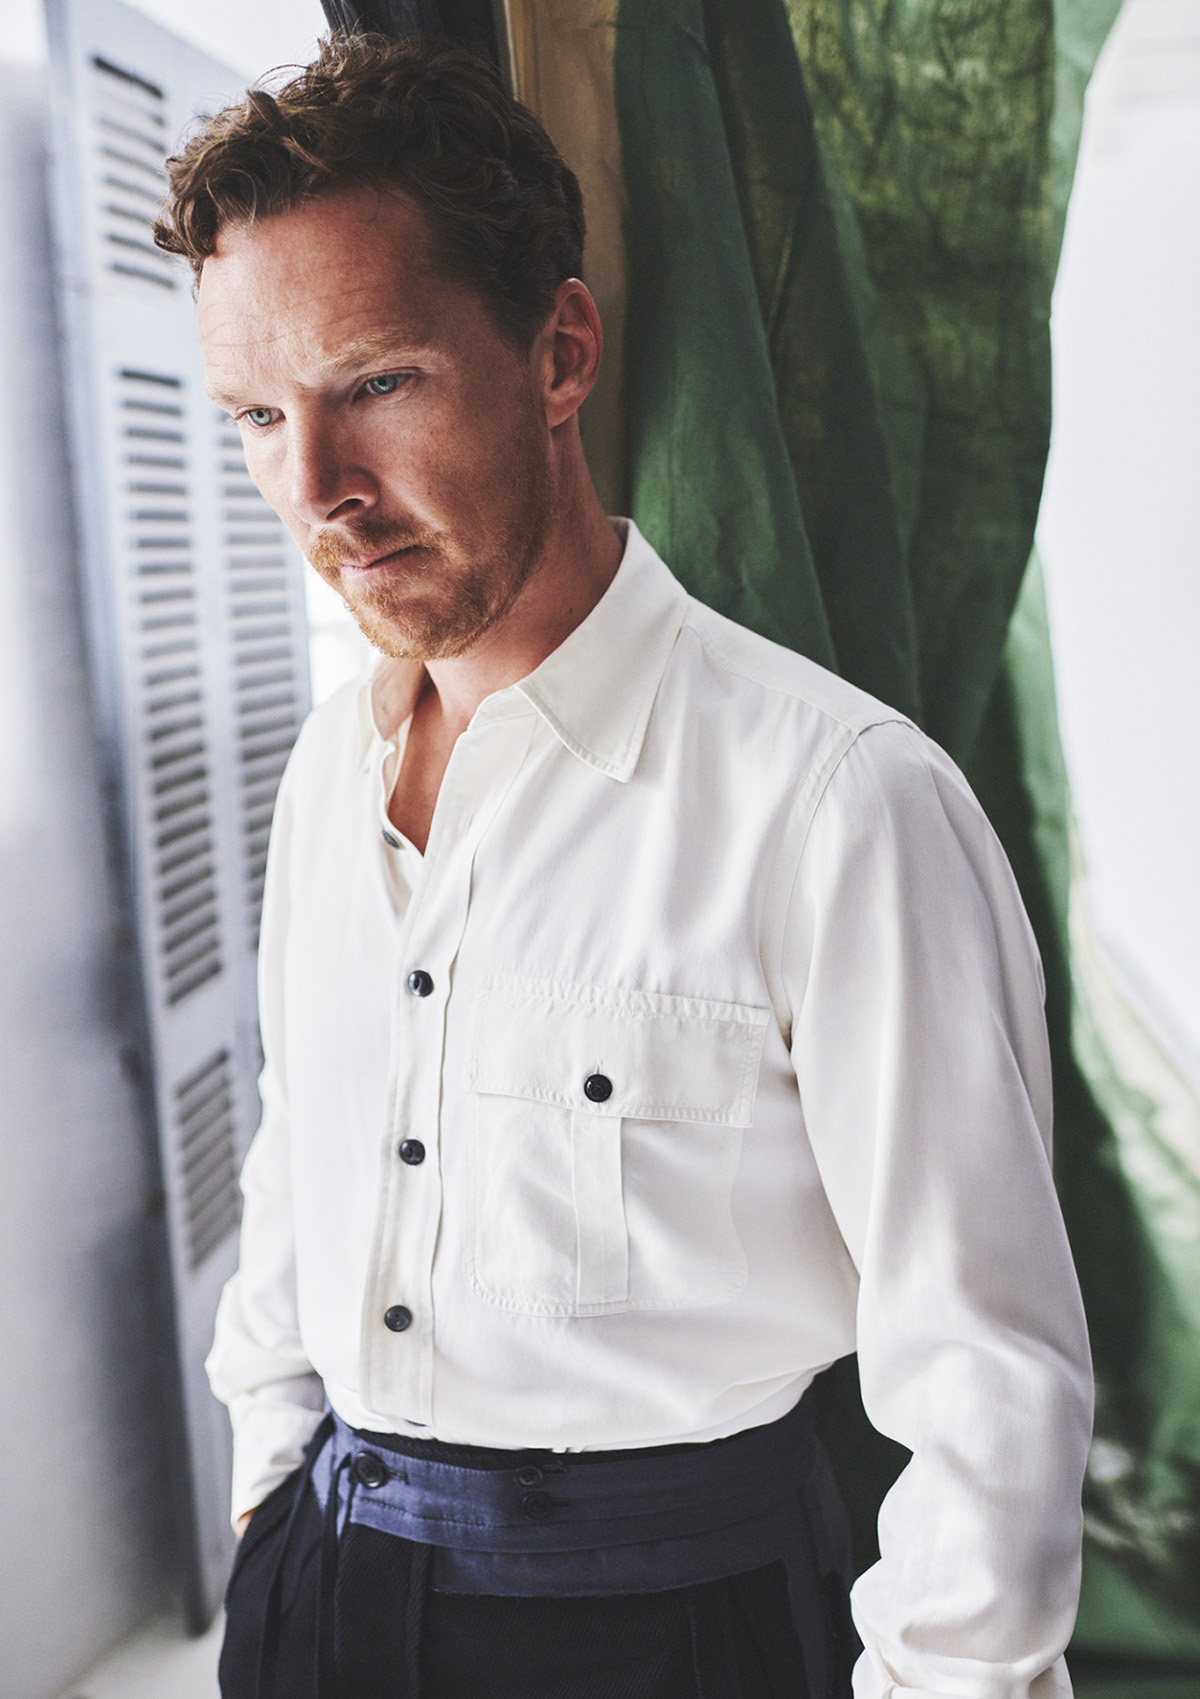 Benedict Cumberbatch covers Esquire UK Winter 2021 by Simon Emmett